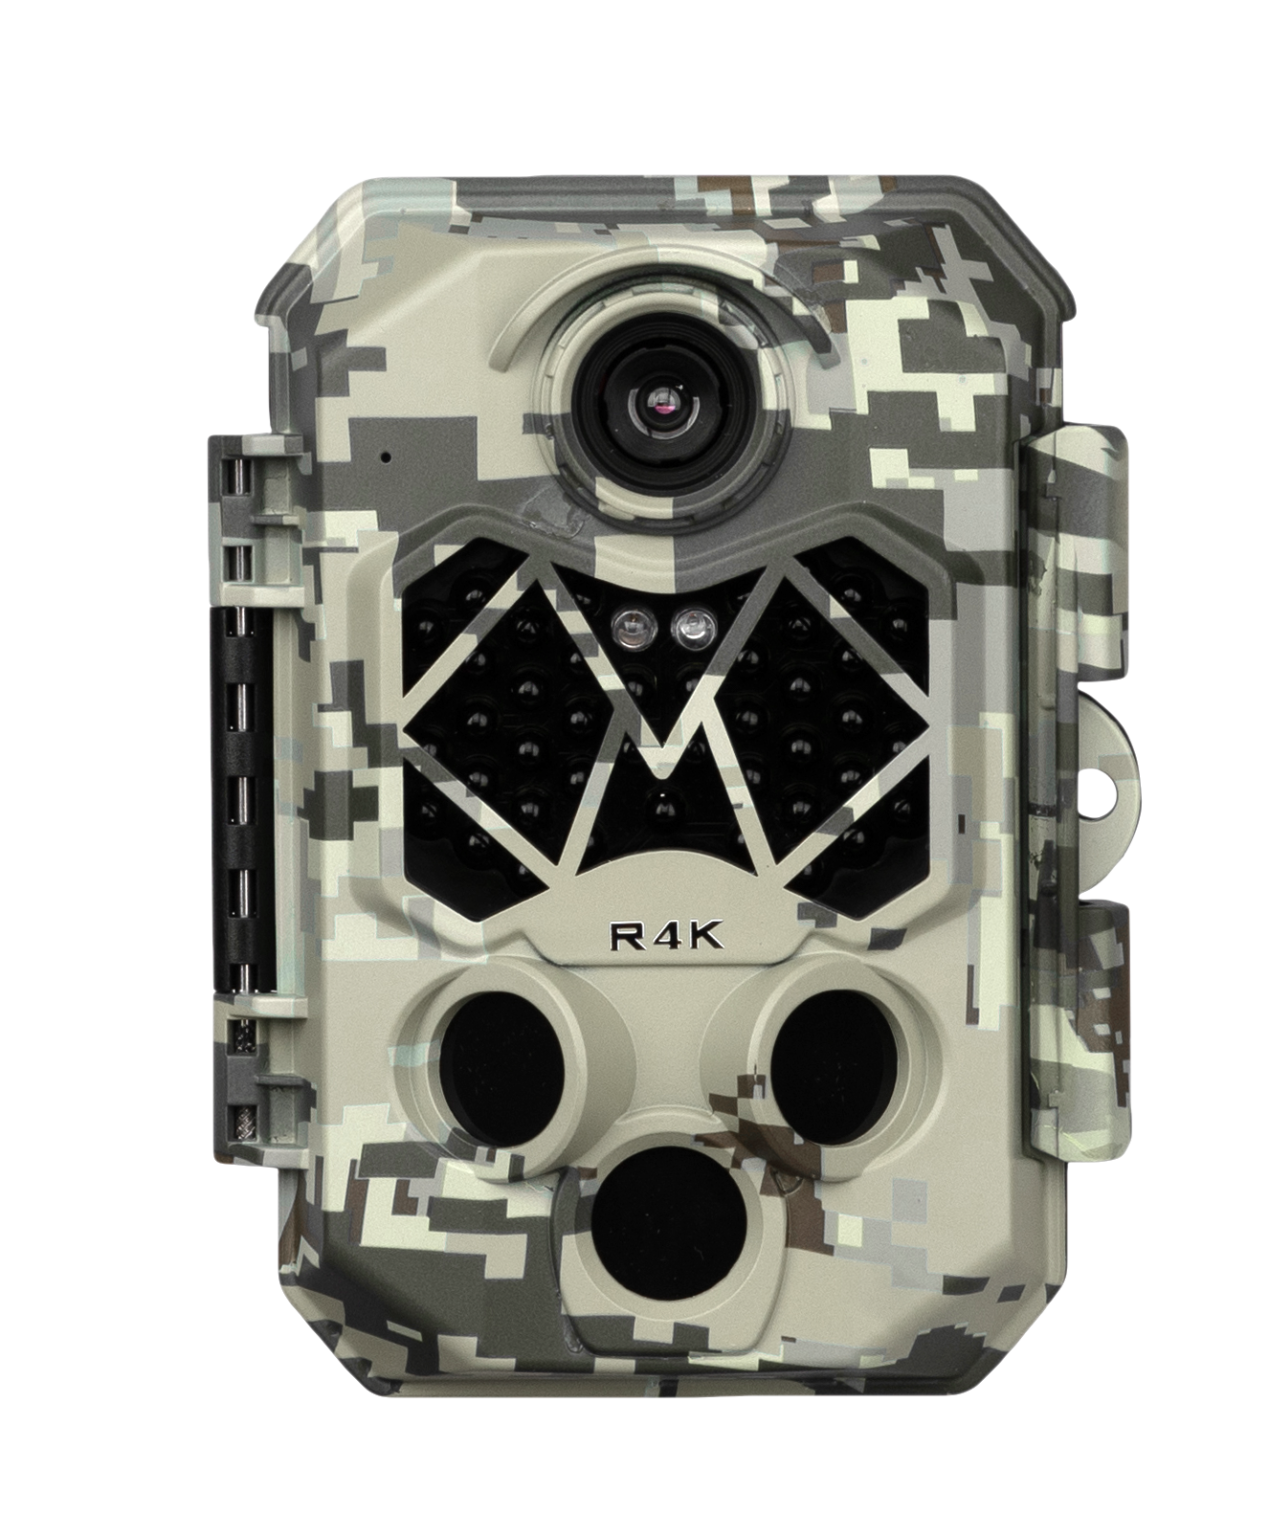 Black Gate Scouting Cameras - R4K